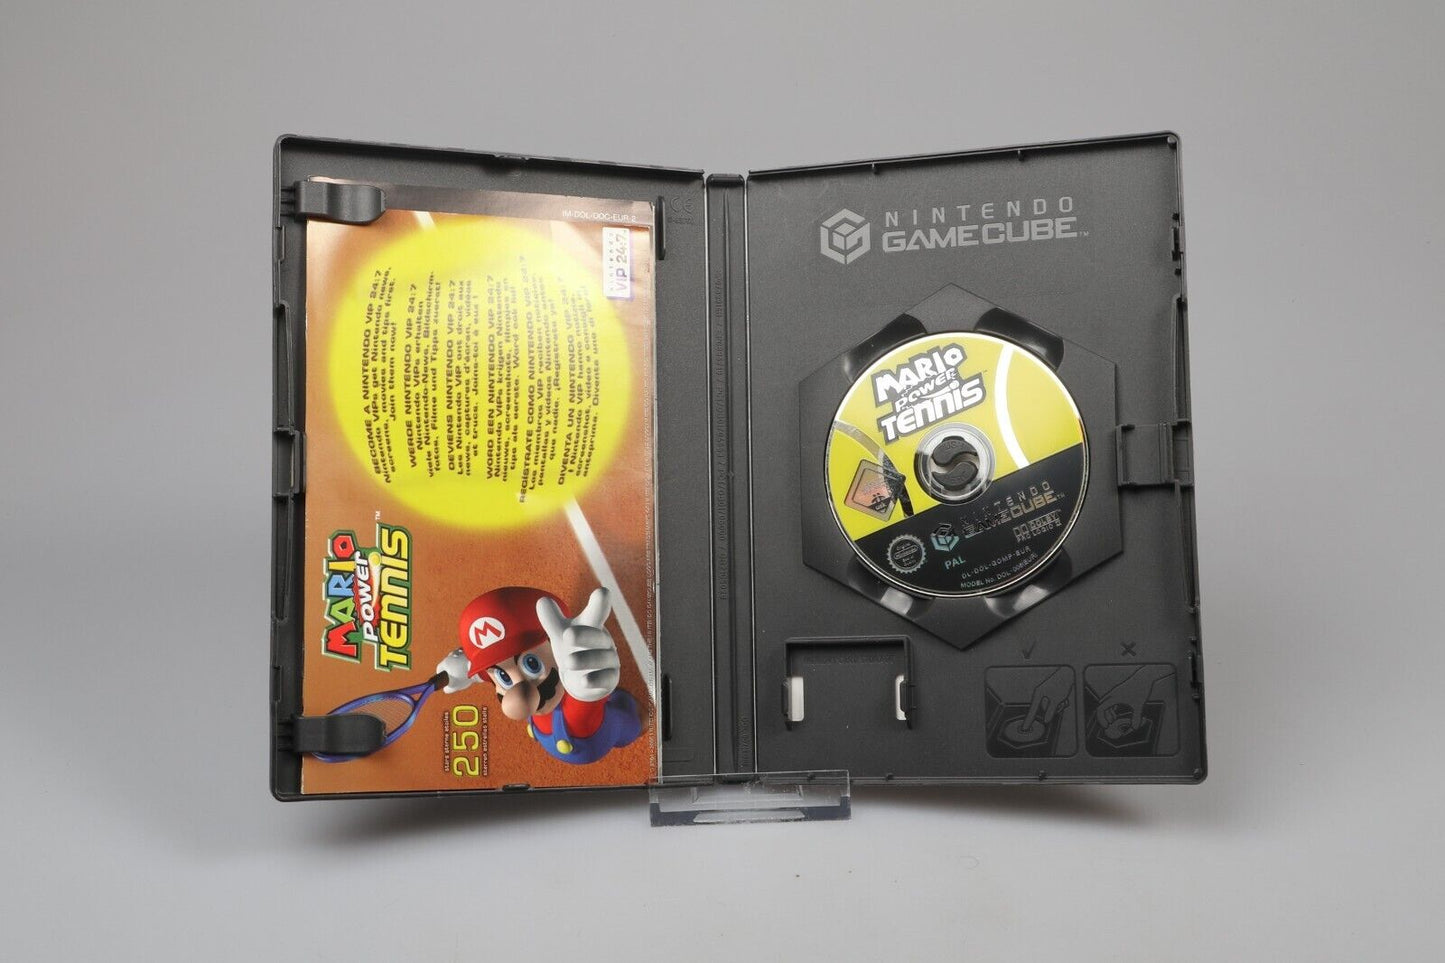 GameCube | Mario Power Tennis (PAL)